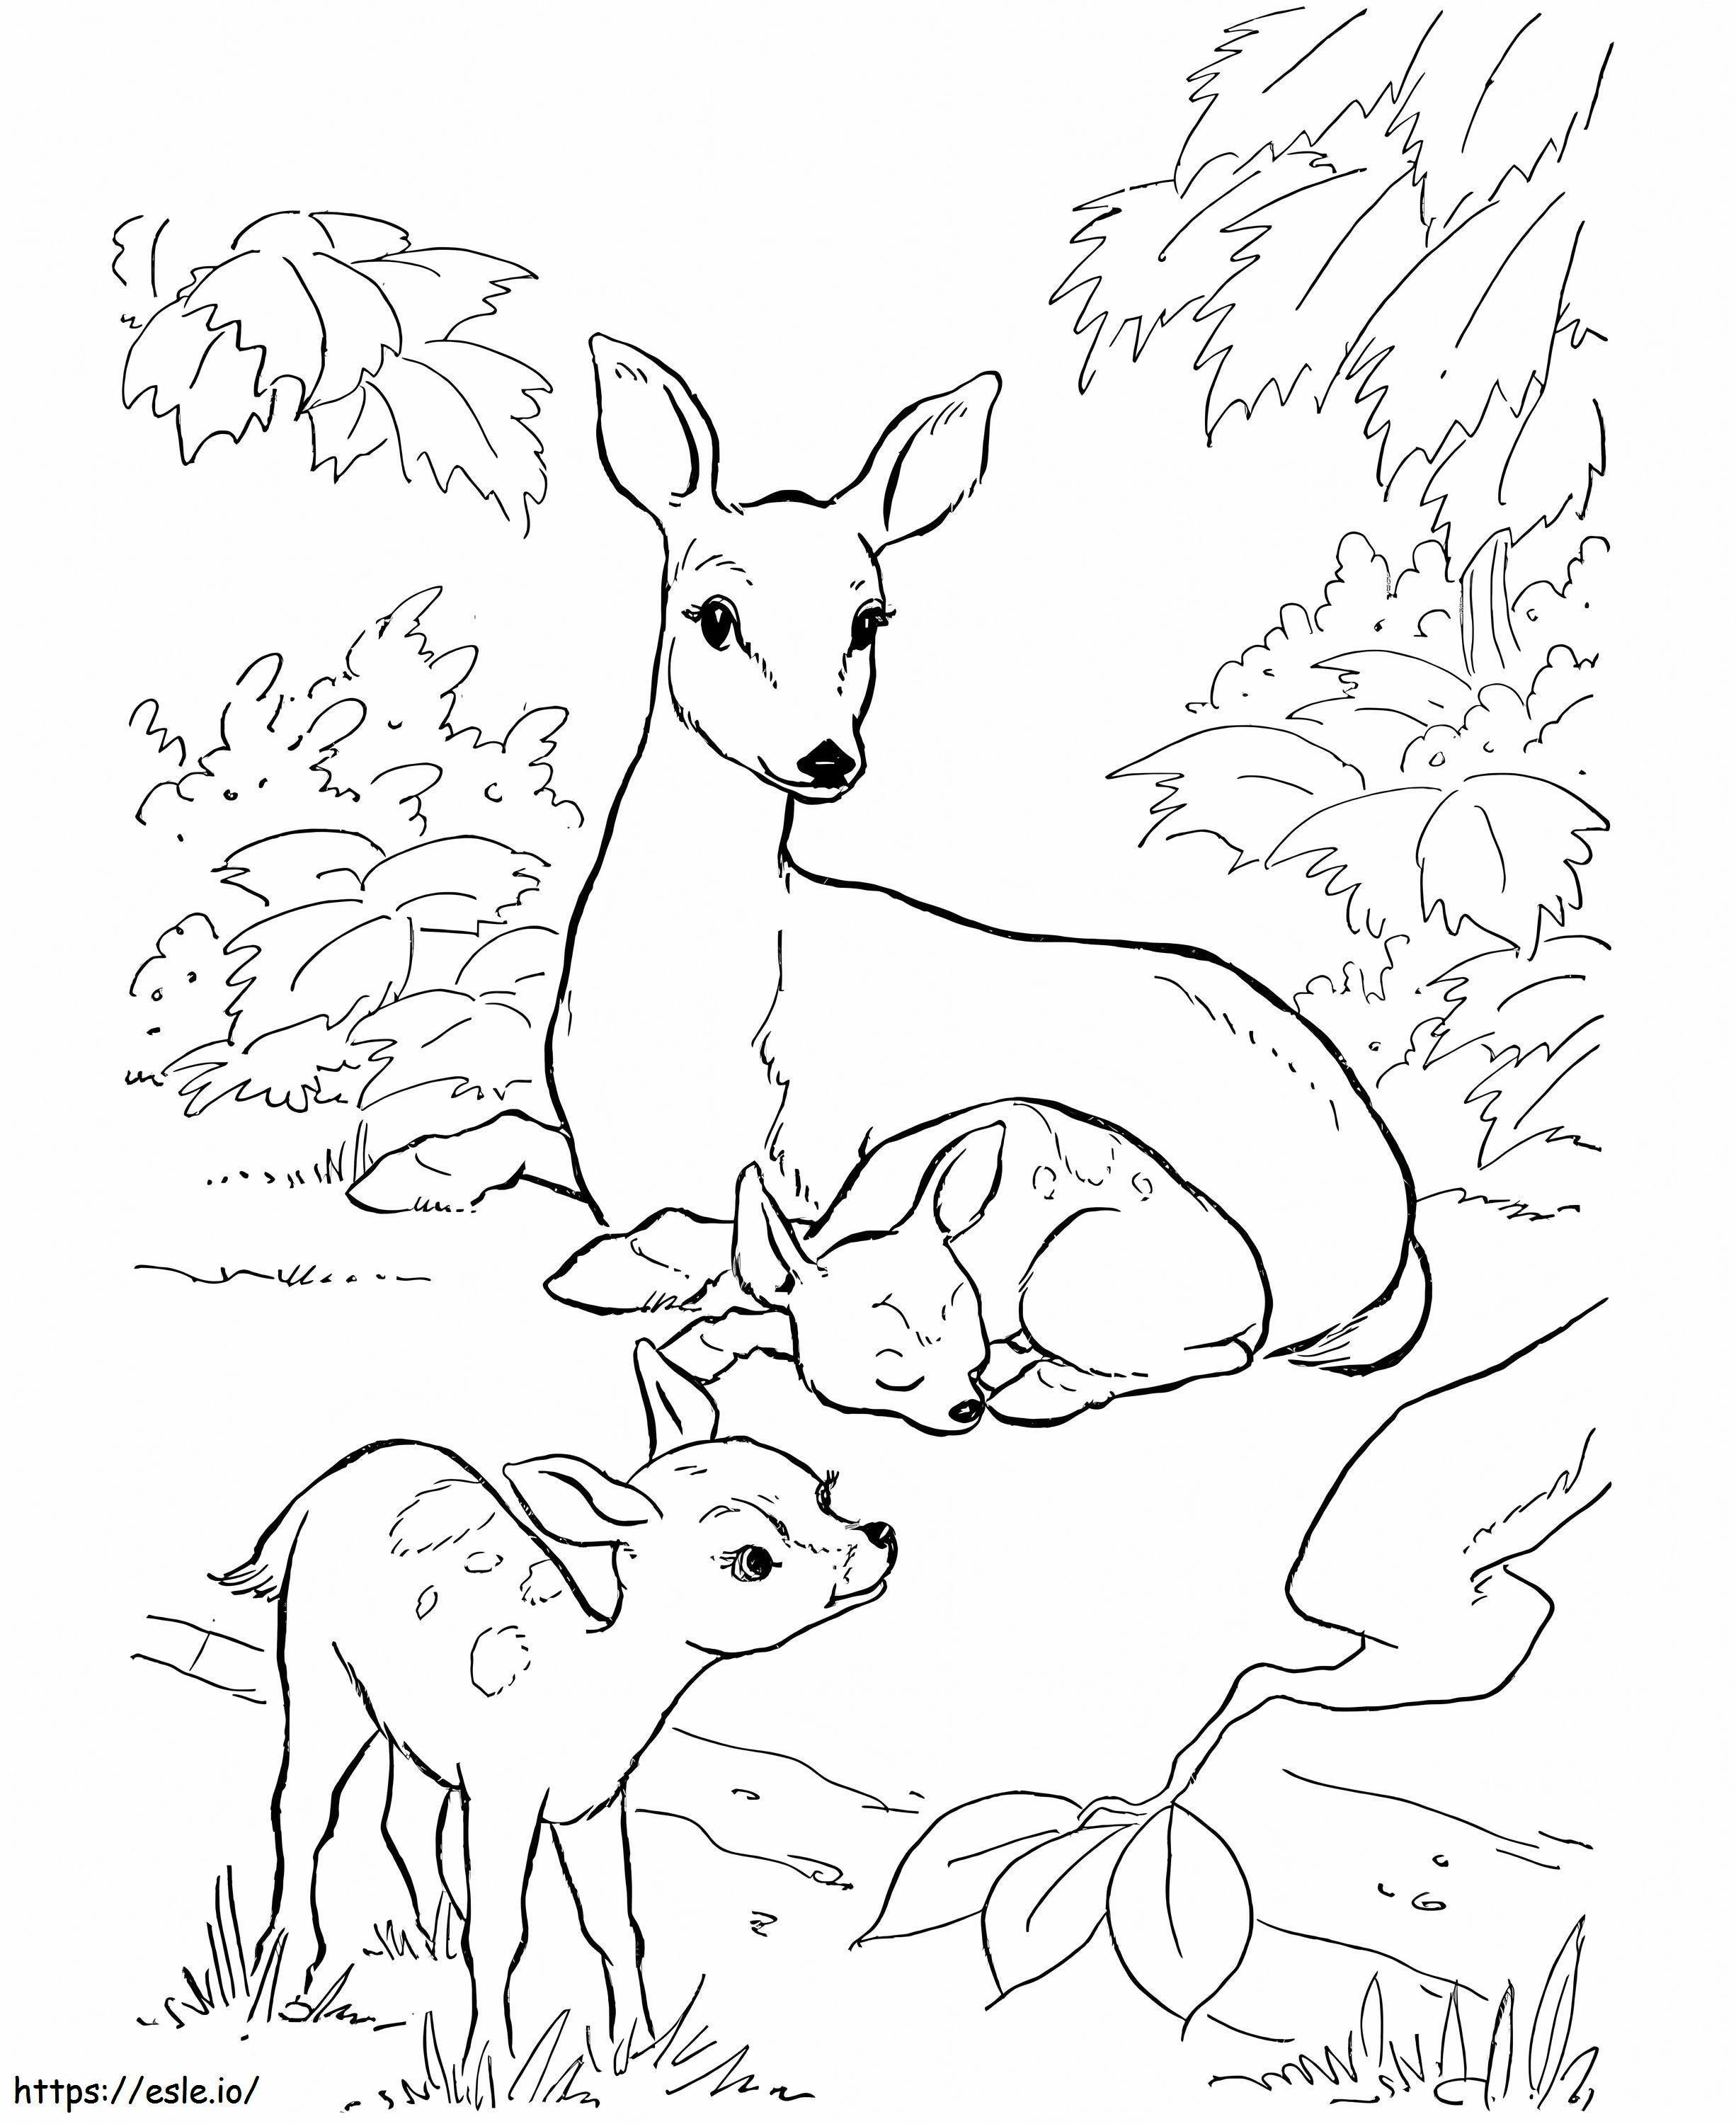 Familiar Deer coloring page